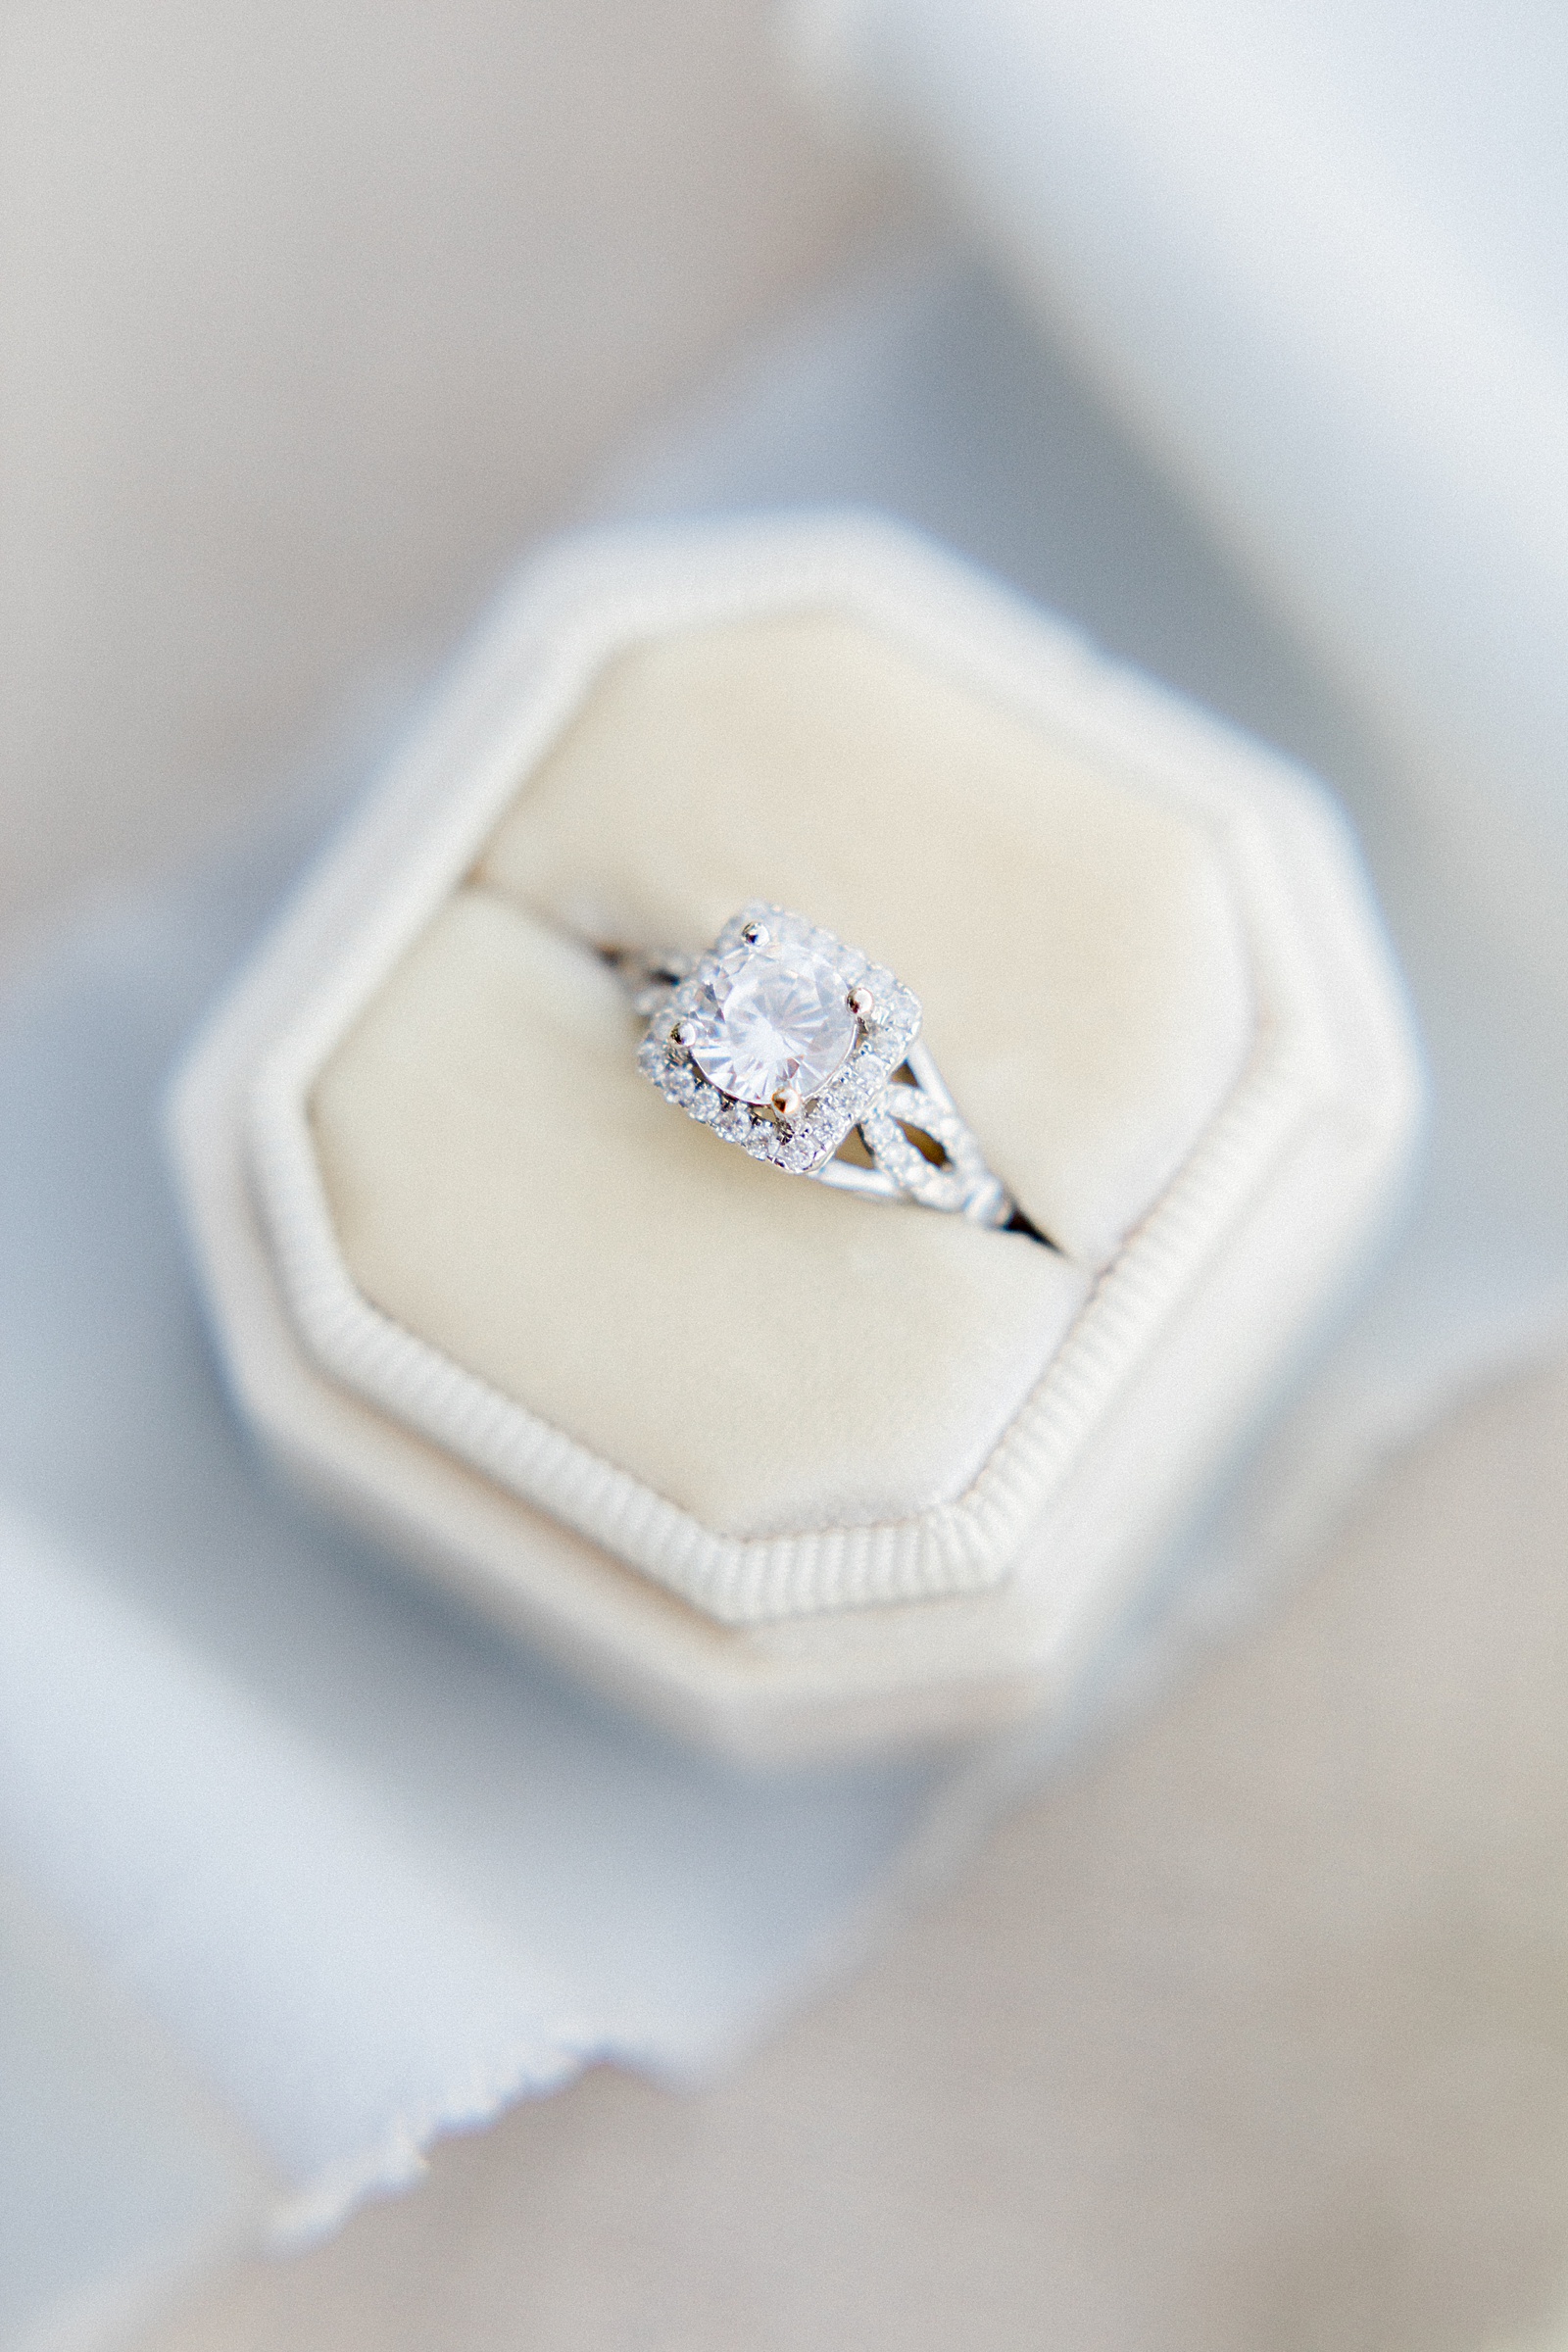 Engagement Ring in Velvet Box, Hill Country Wedding Inspiration, Anna Kay Photography, San Antonio Wedding Photographer